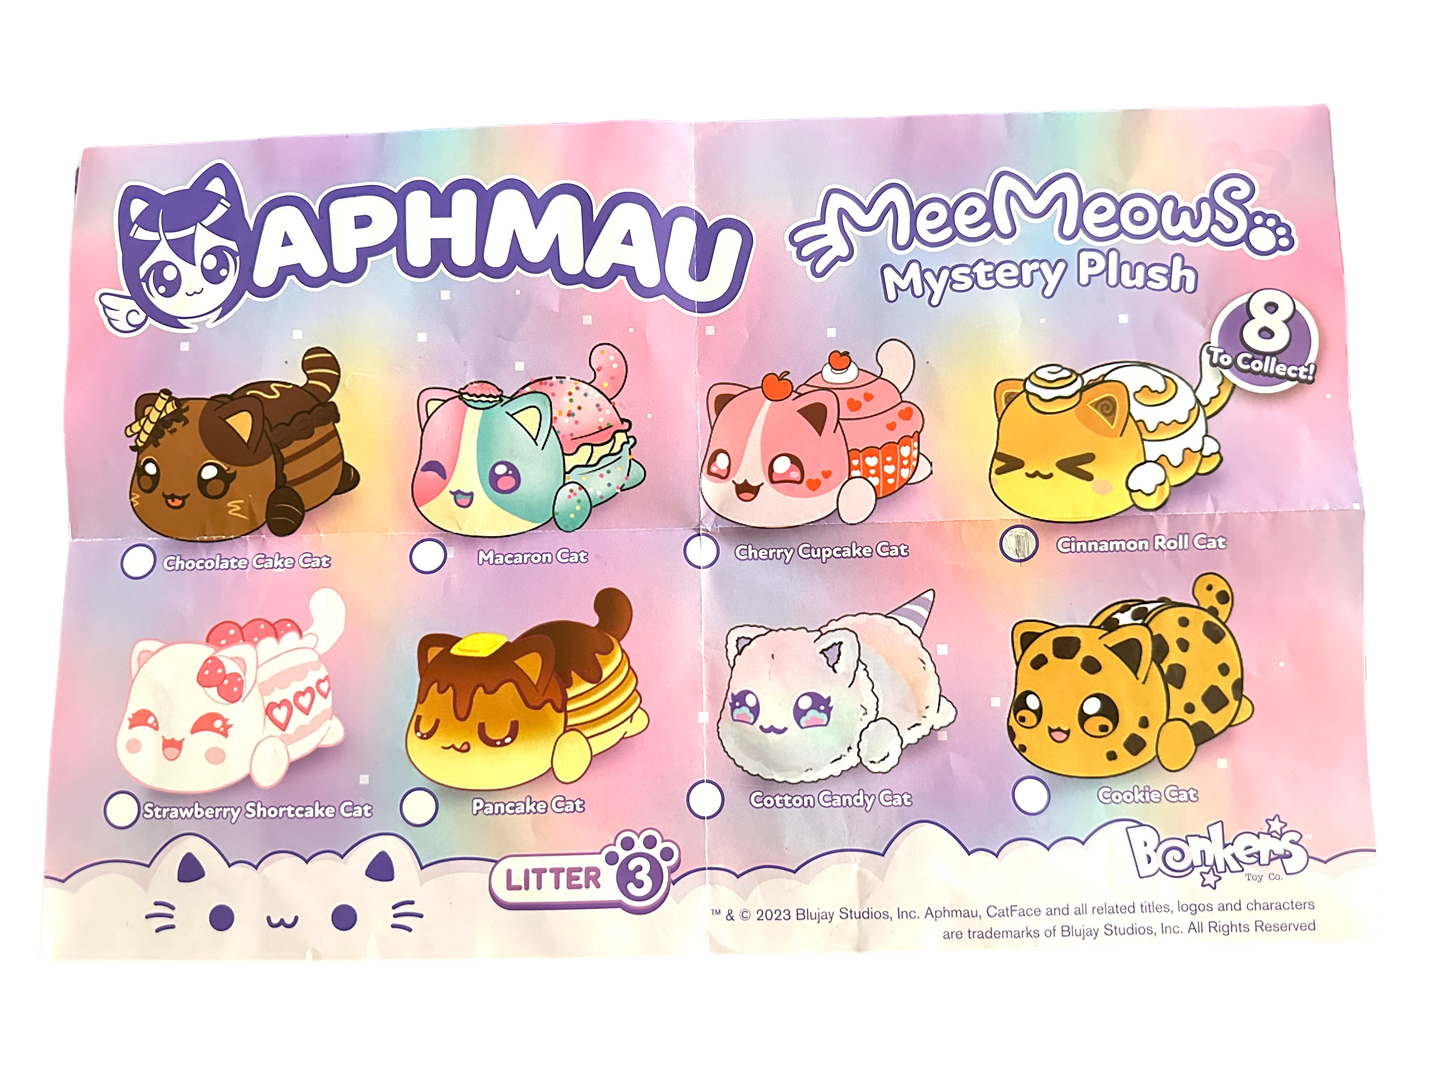 STRAWBERRY SHORTCAKE CAT - MeeMeows Litter 3 - Aphmau (BRAND NEW) Kitty Plushie!